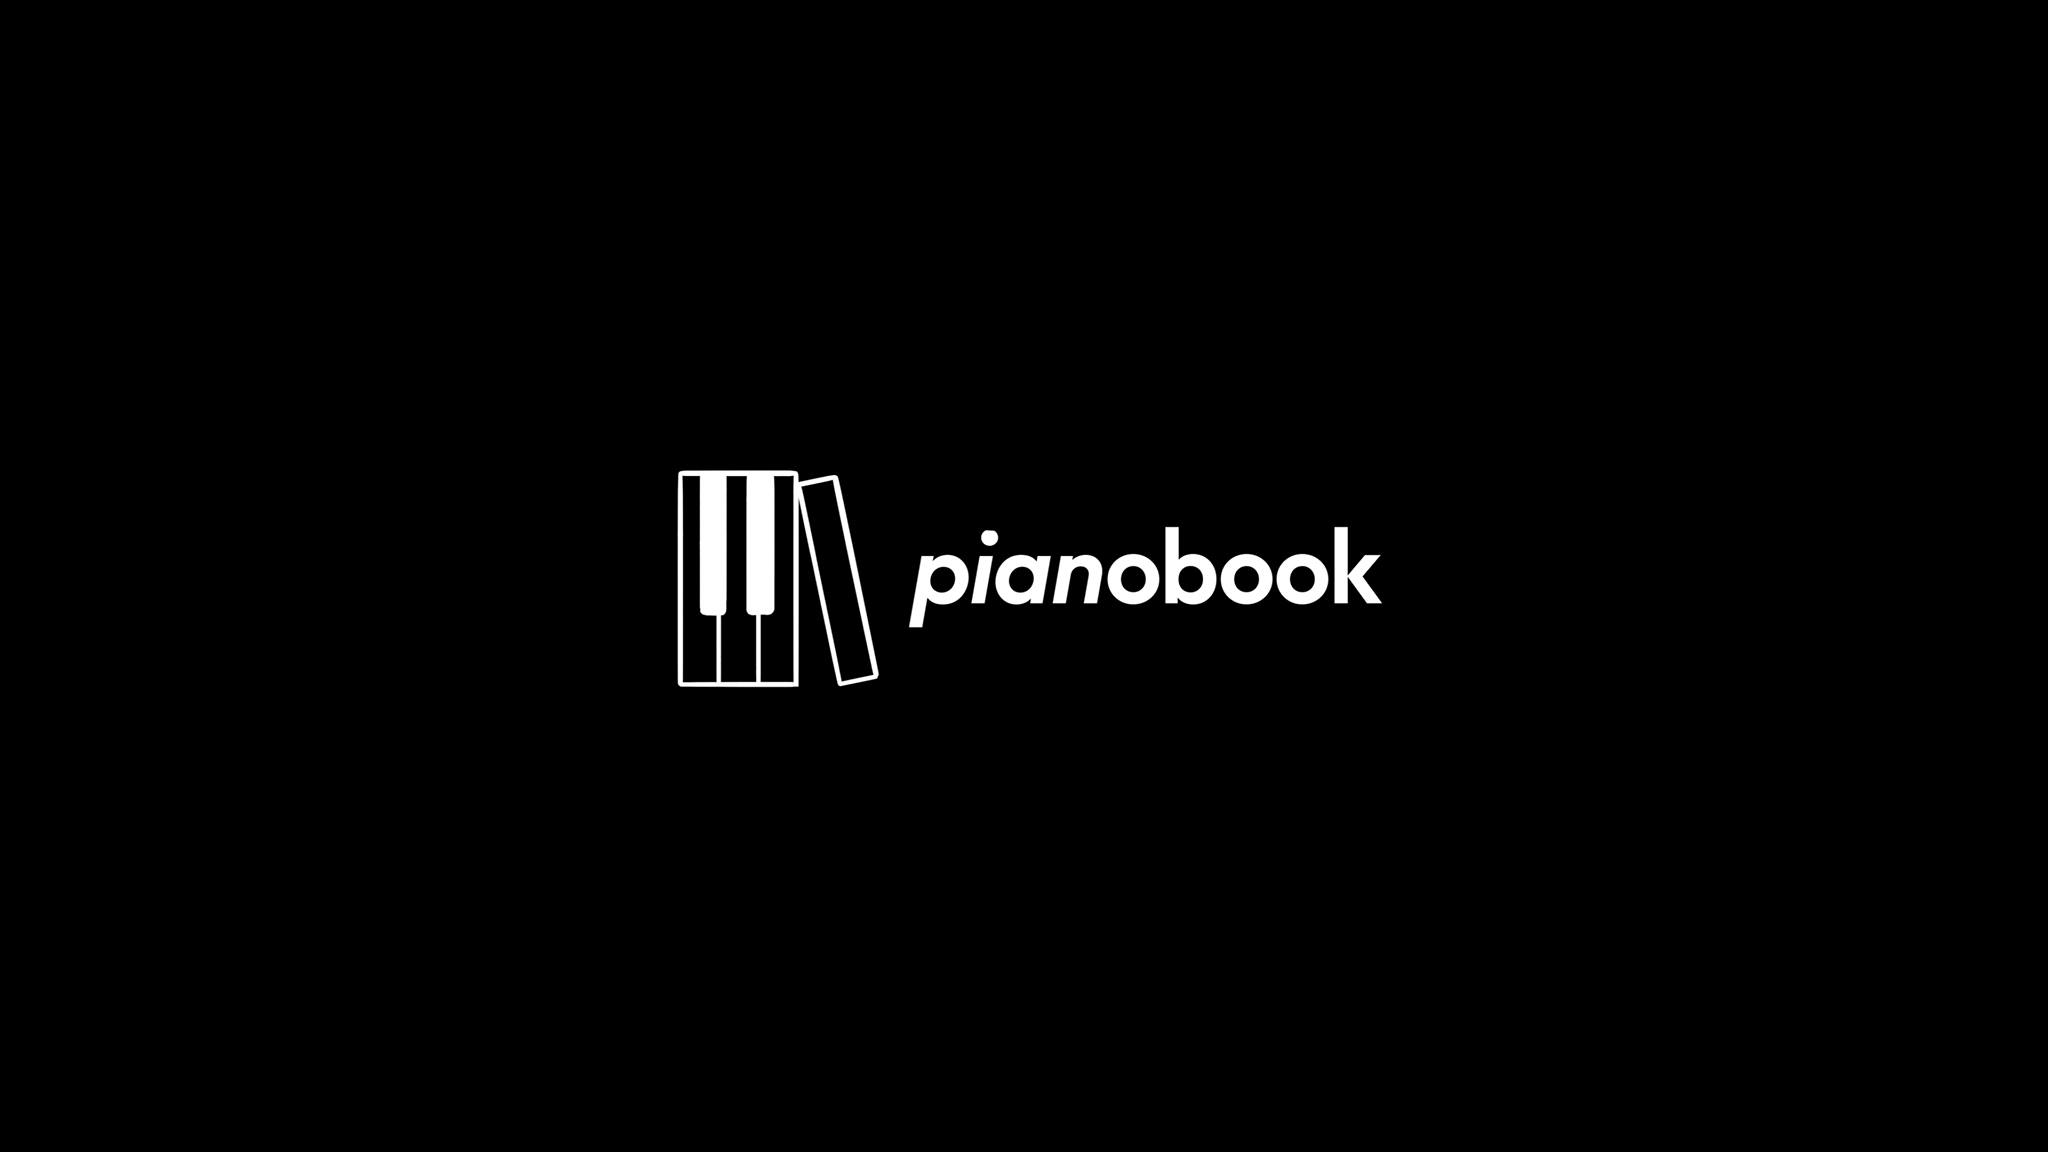 Pianobook logo